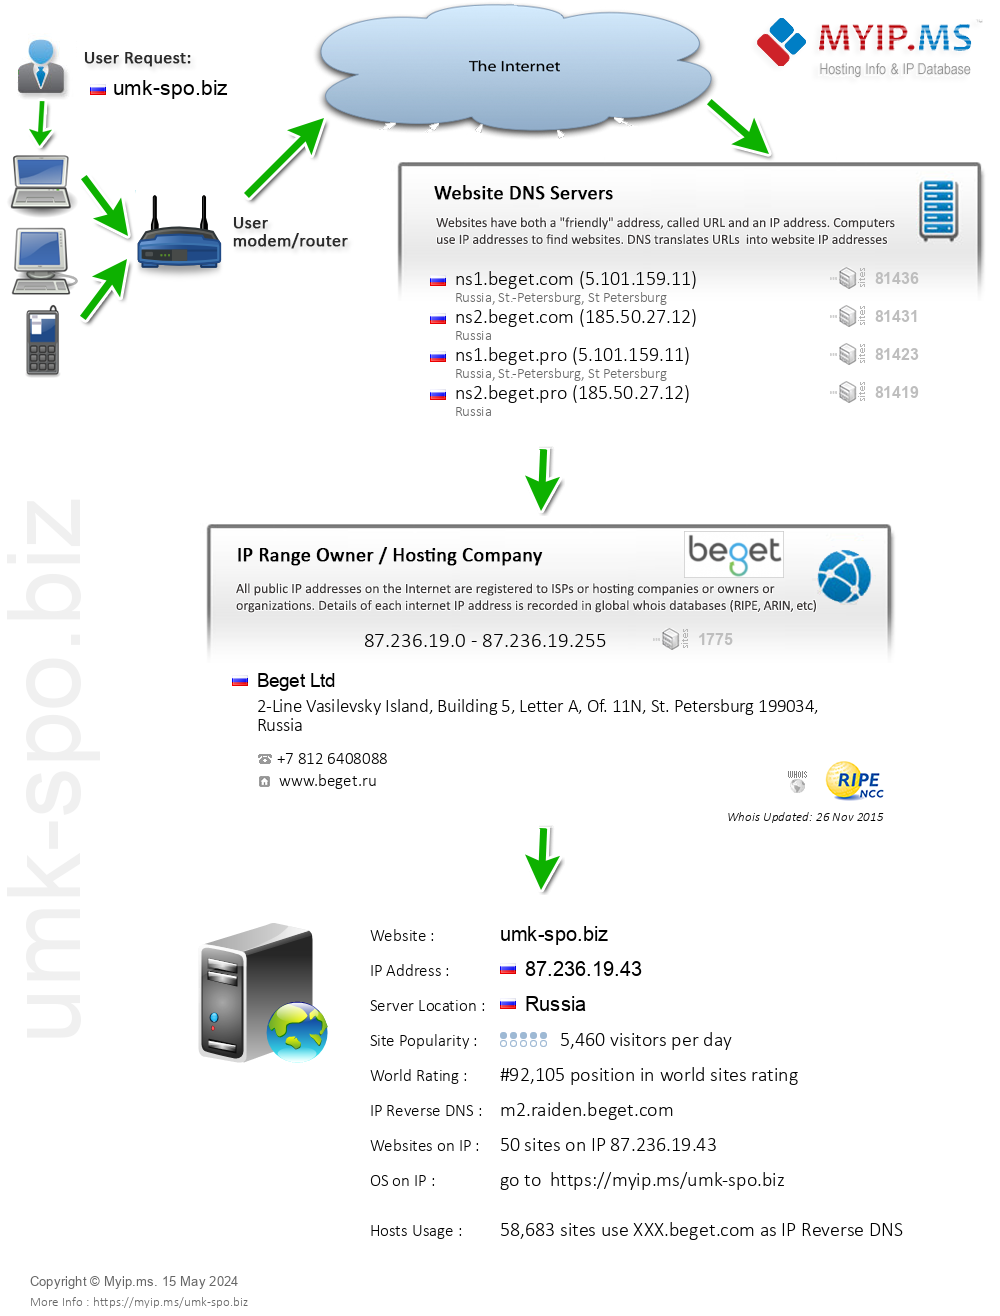 Umk-spo.biz - Website Hosting Visual IP Diagram